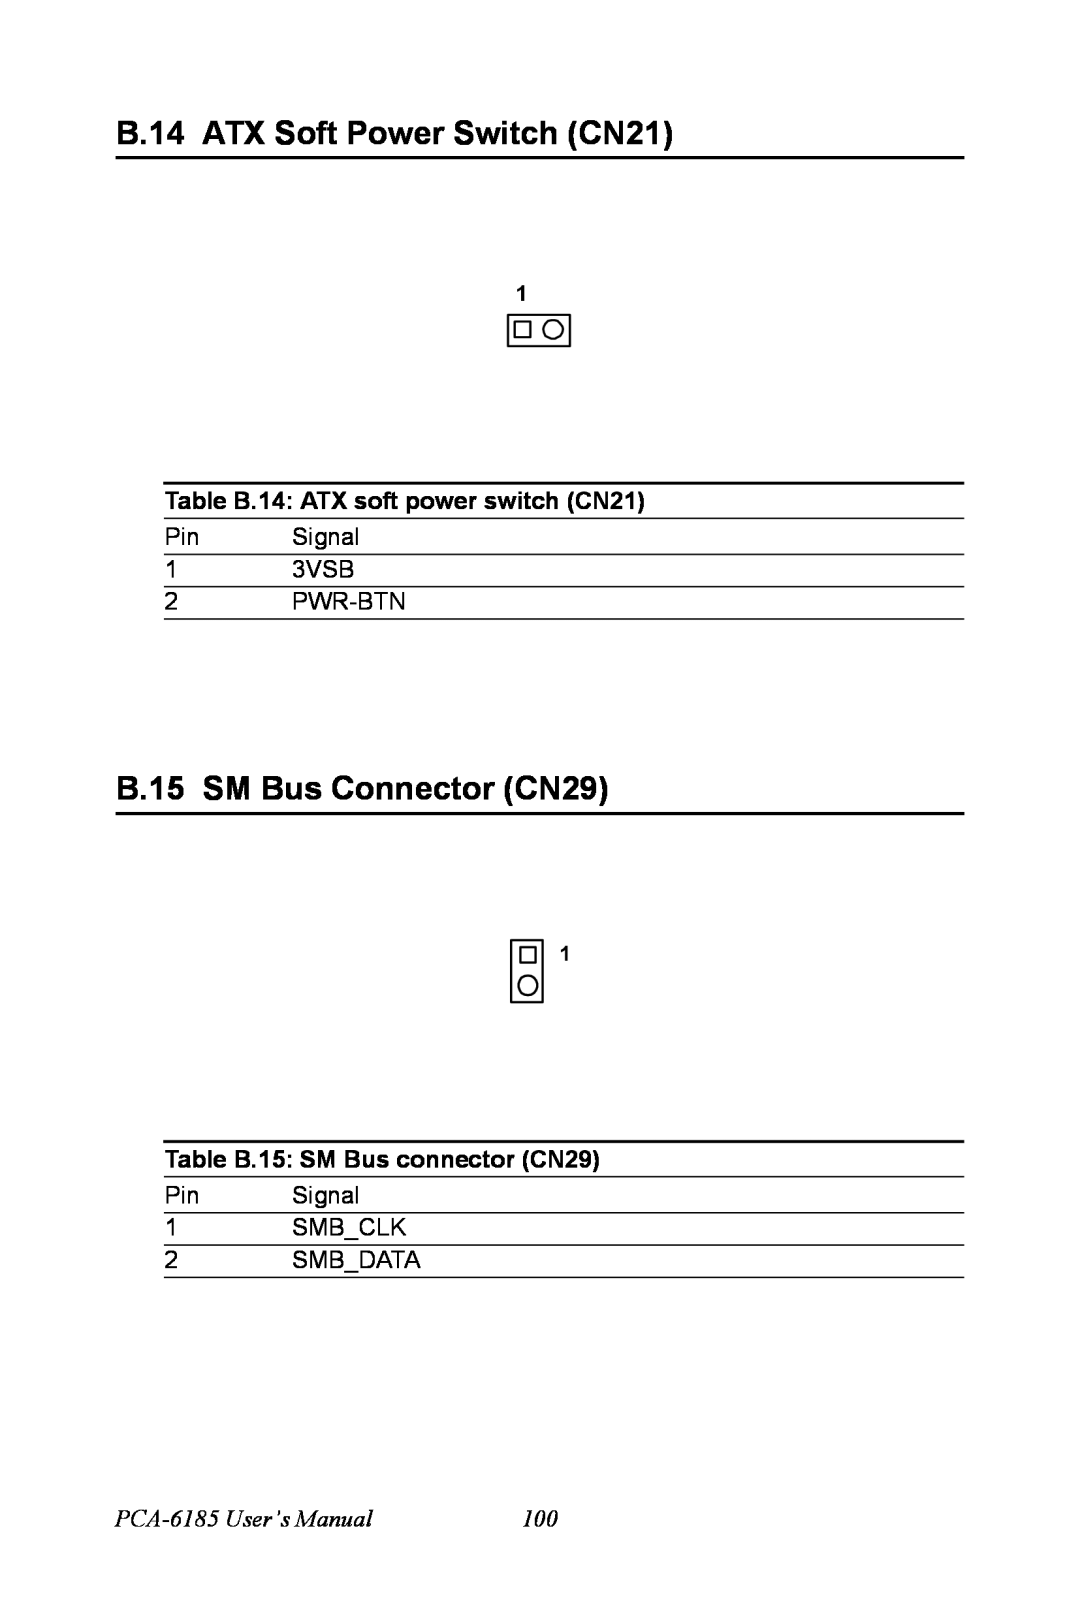 Advantech PCA-6185 B.14 ATX Soft Power Switch CN21, B.15 SM Bus Connector CN29, Table B.14 ATX soft power switch CN21 